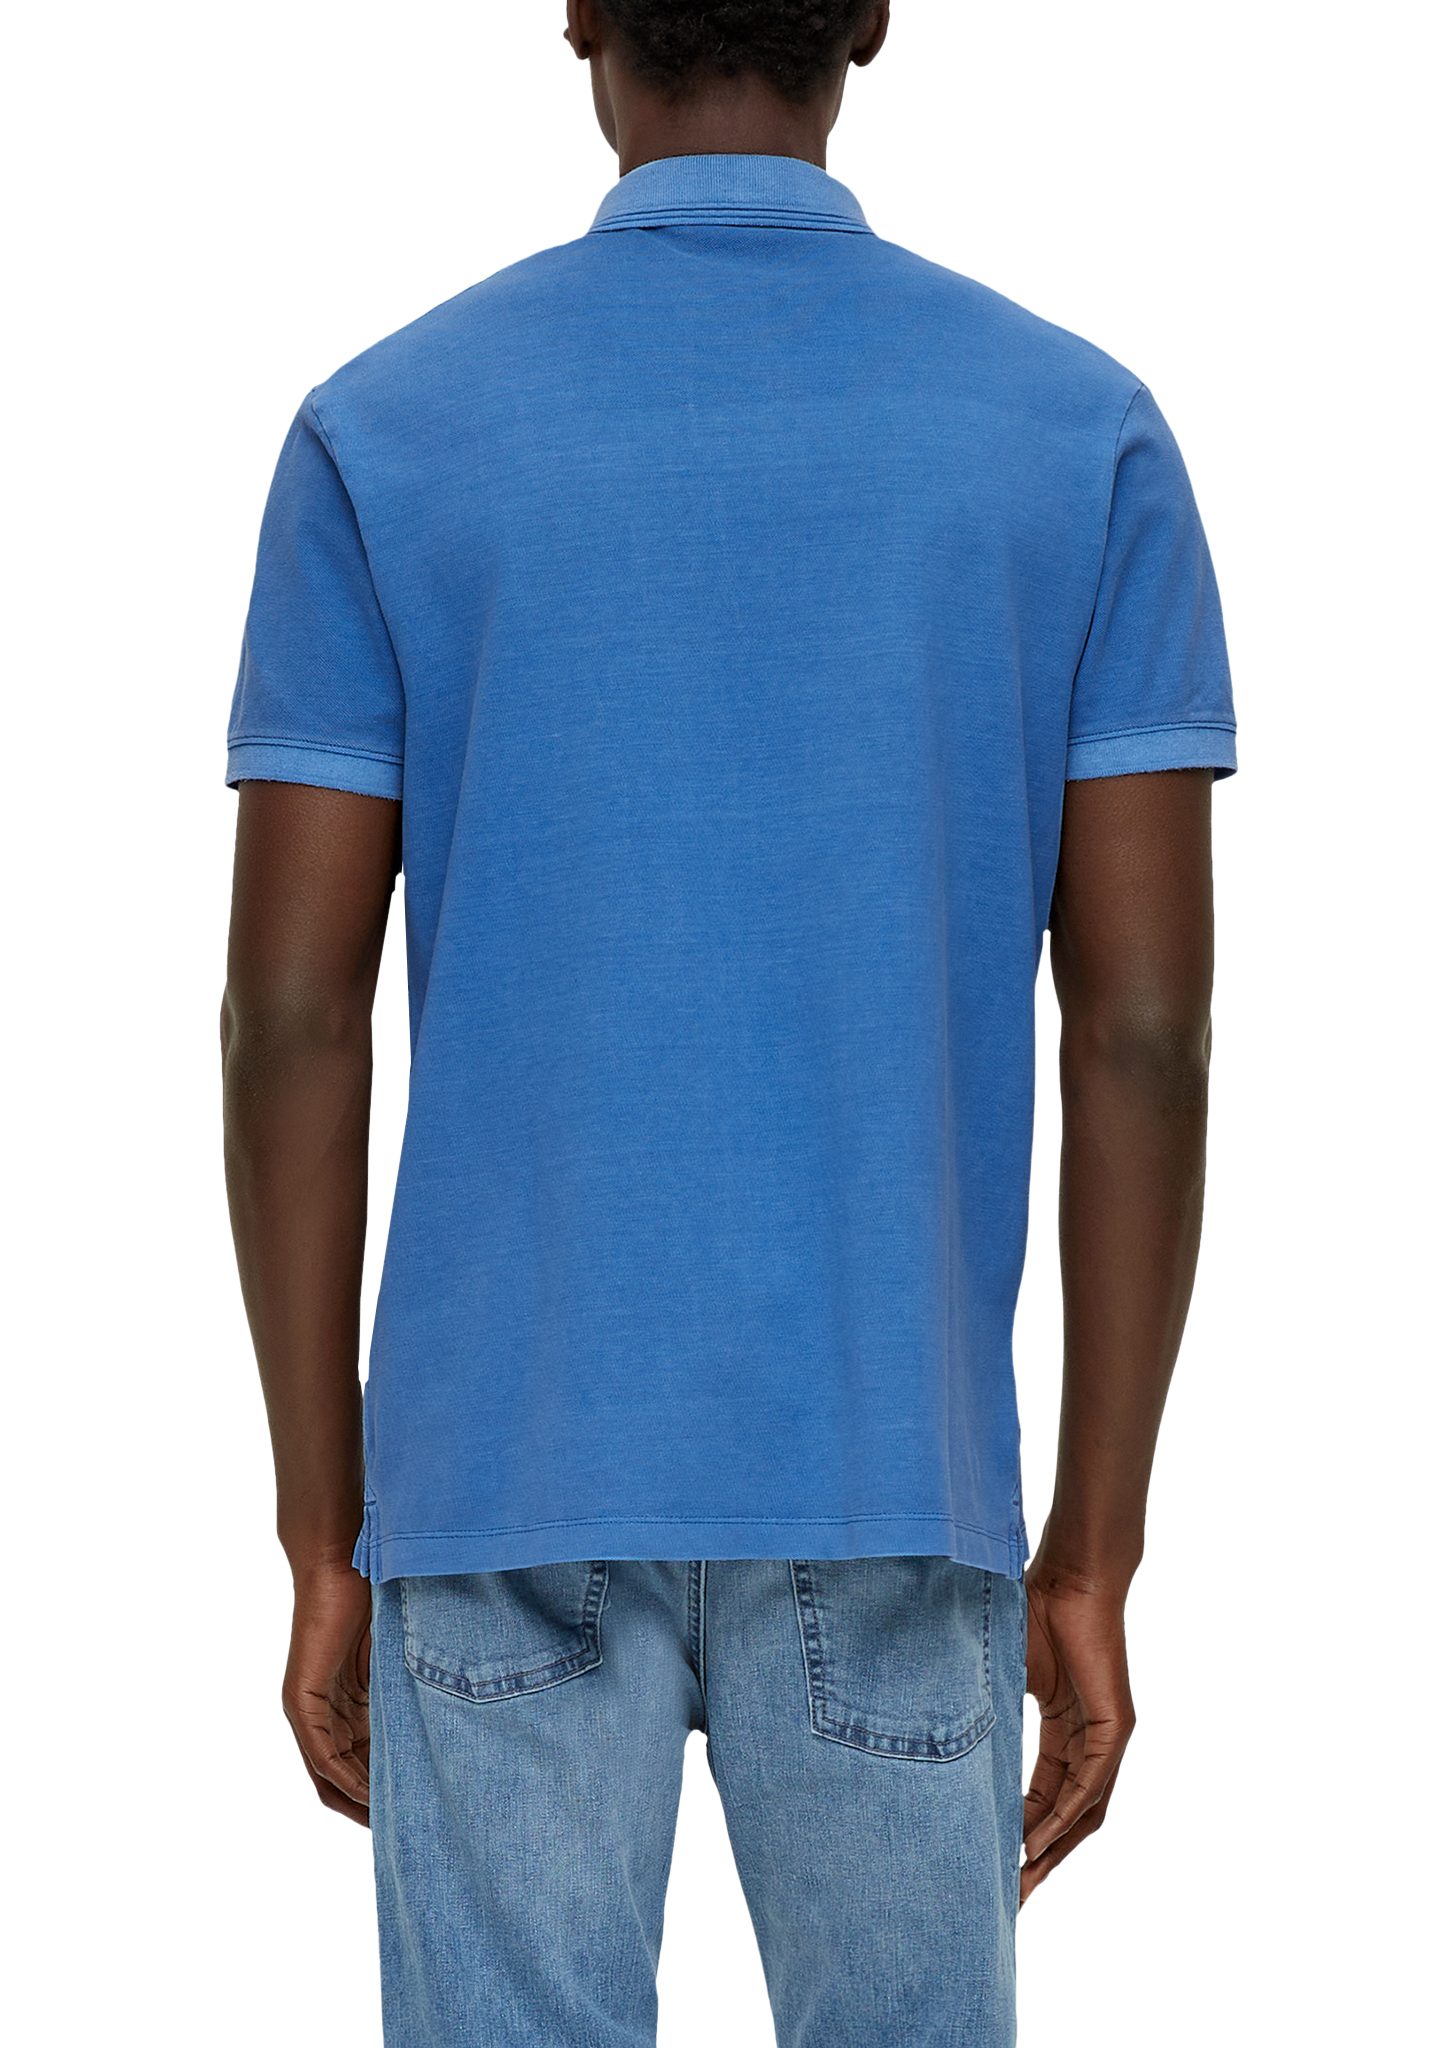 tiefblau mit Dye, s.Oliver Garment Logo-Patch Polo-Shirt Label-Patch Poloshirt